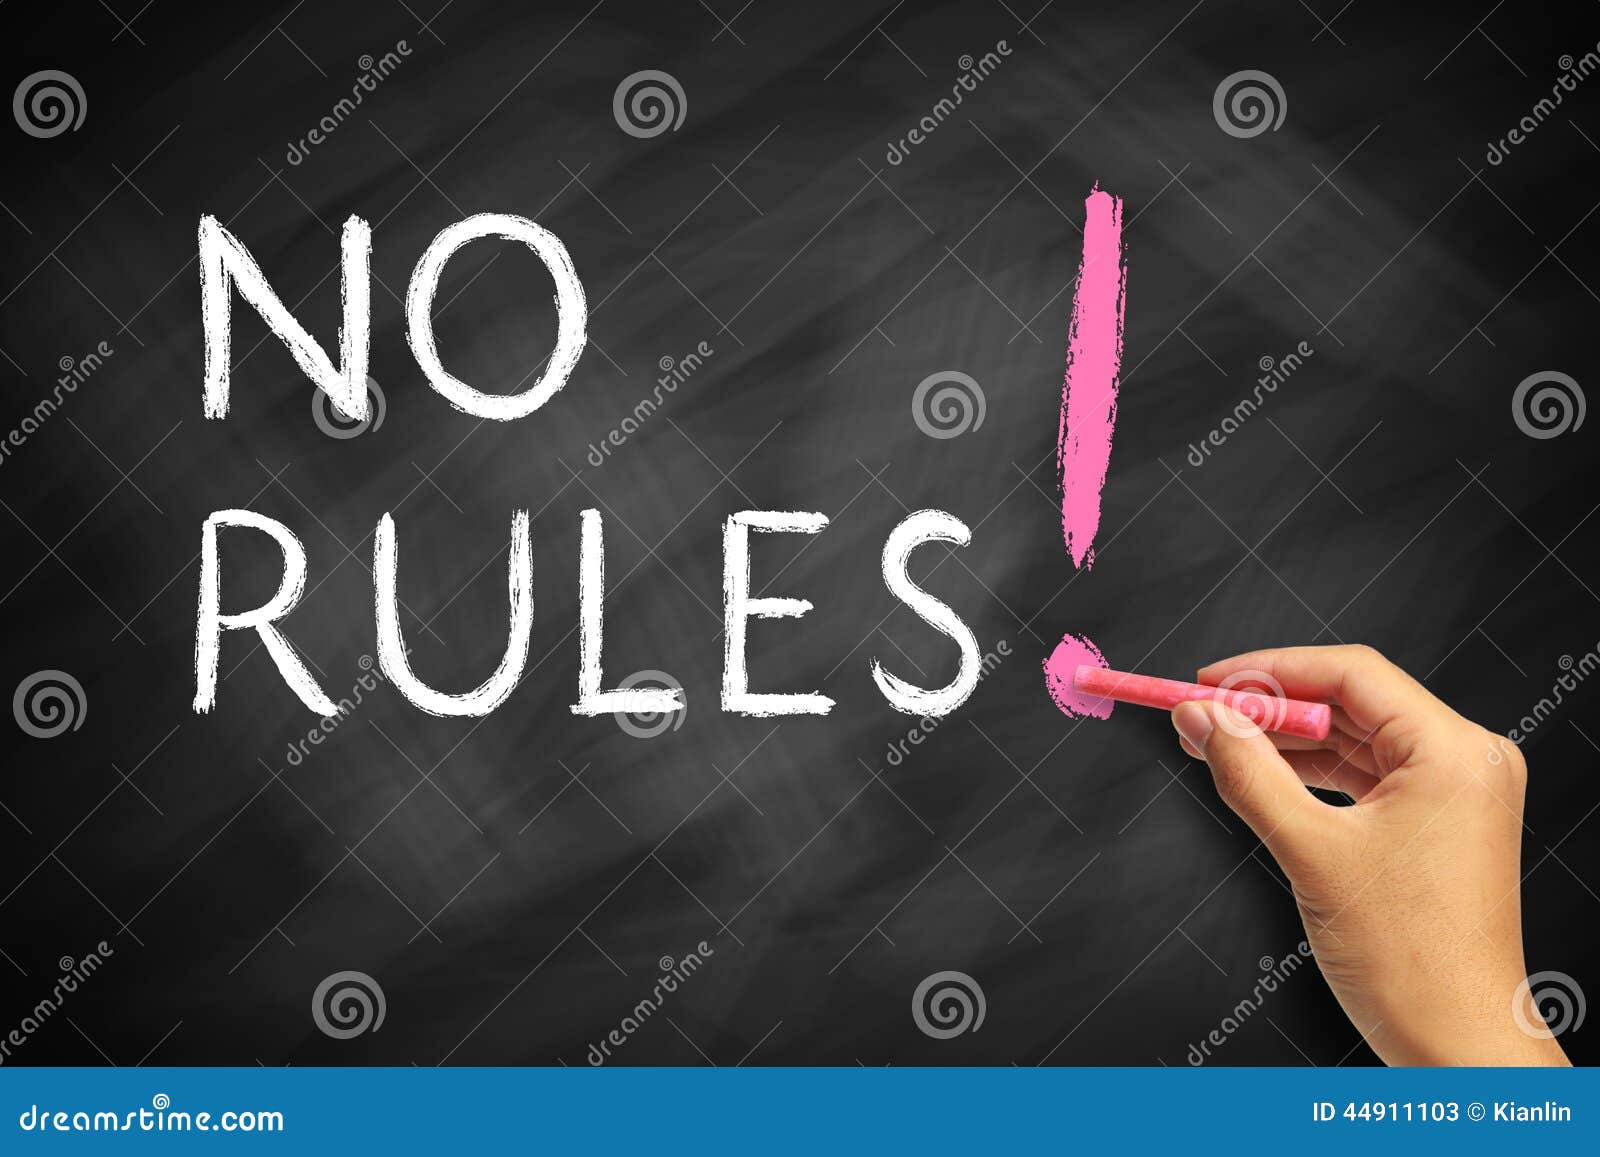 no rules